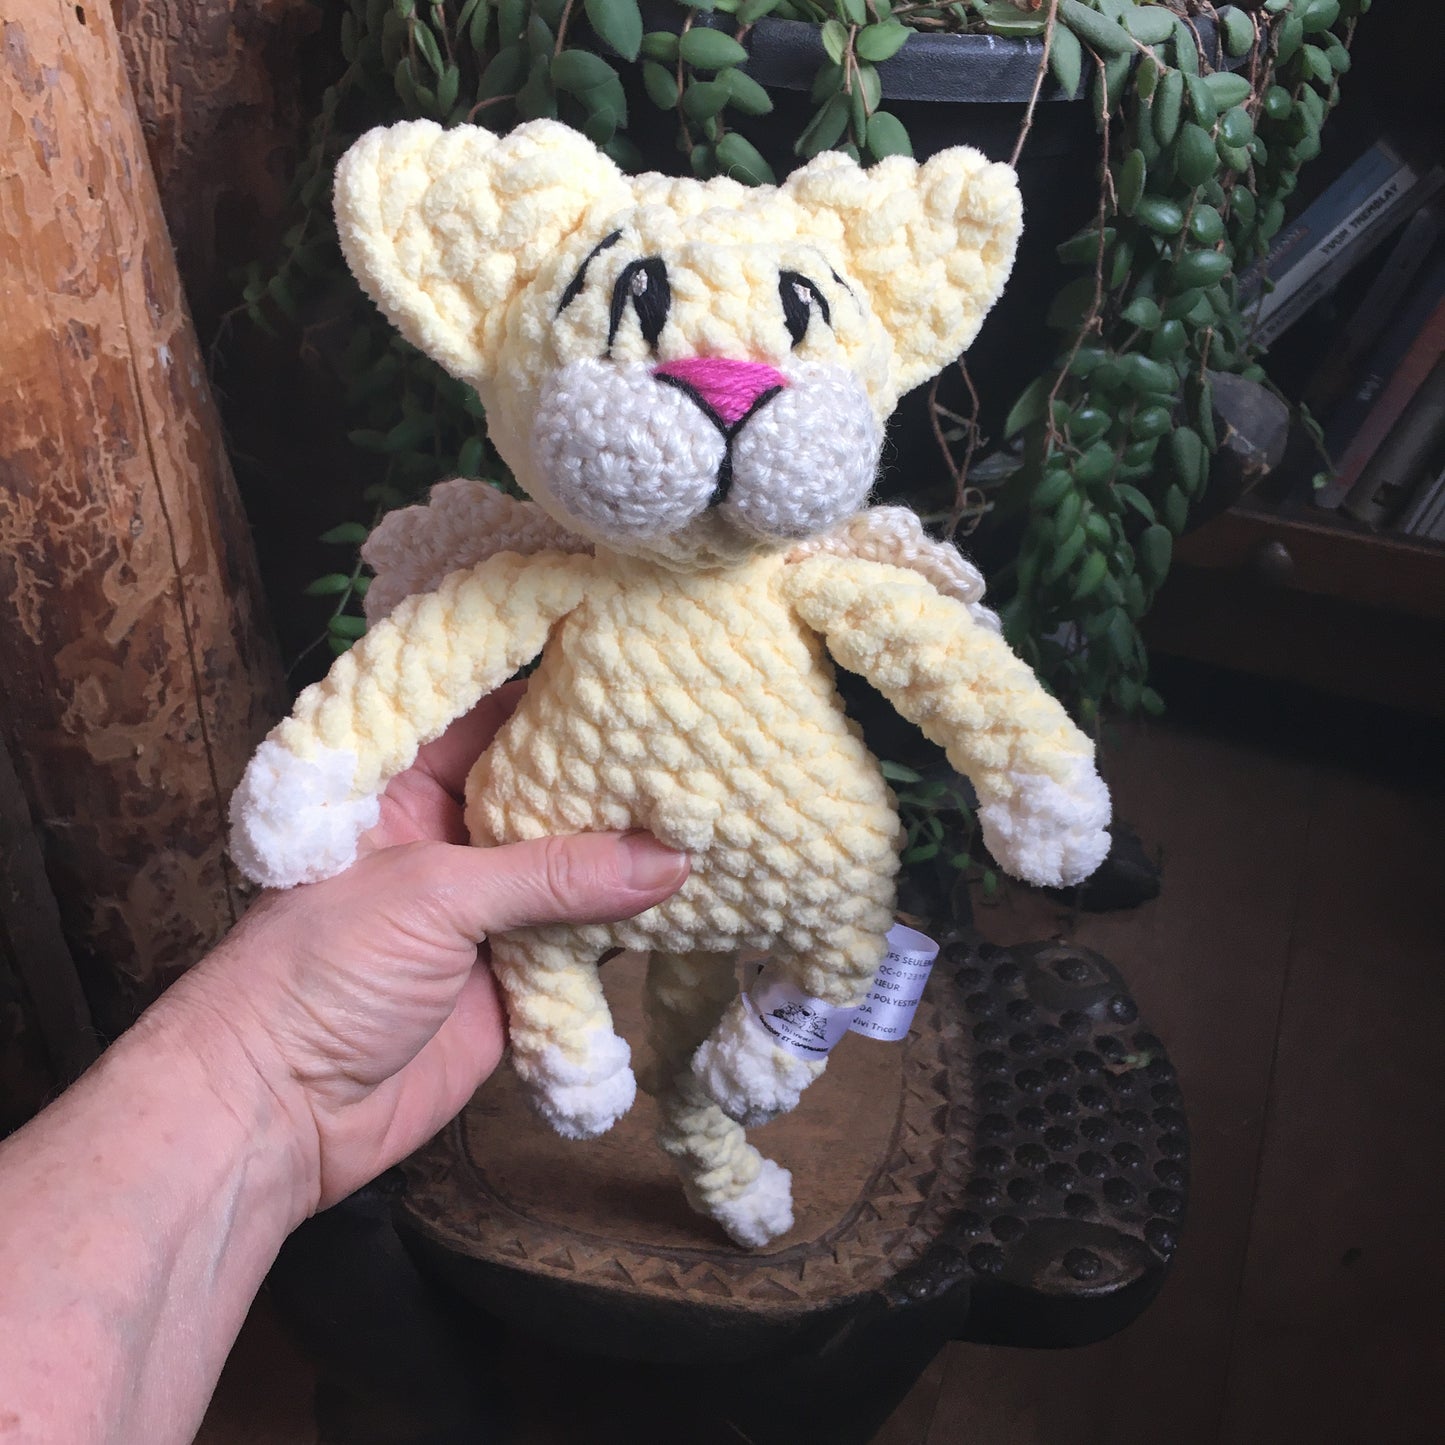 The CAT’ANGEL baby yellow and vanilla